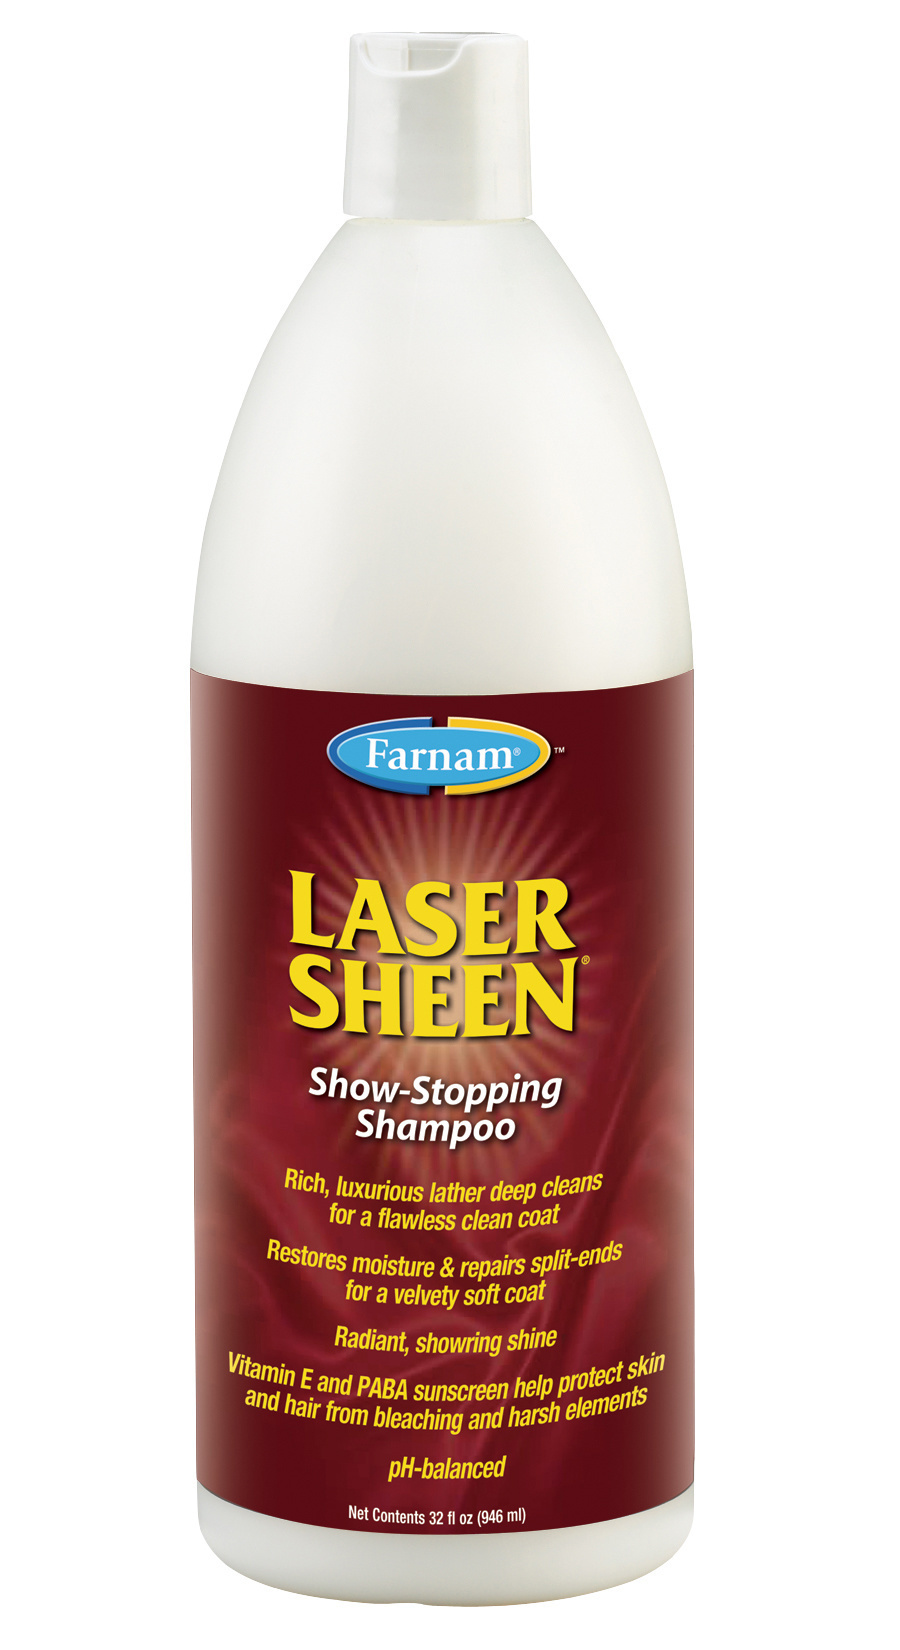 Farnam Laser Sheen show-stopping shampoo